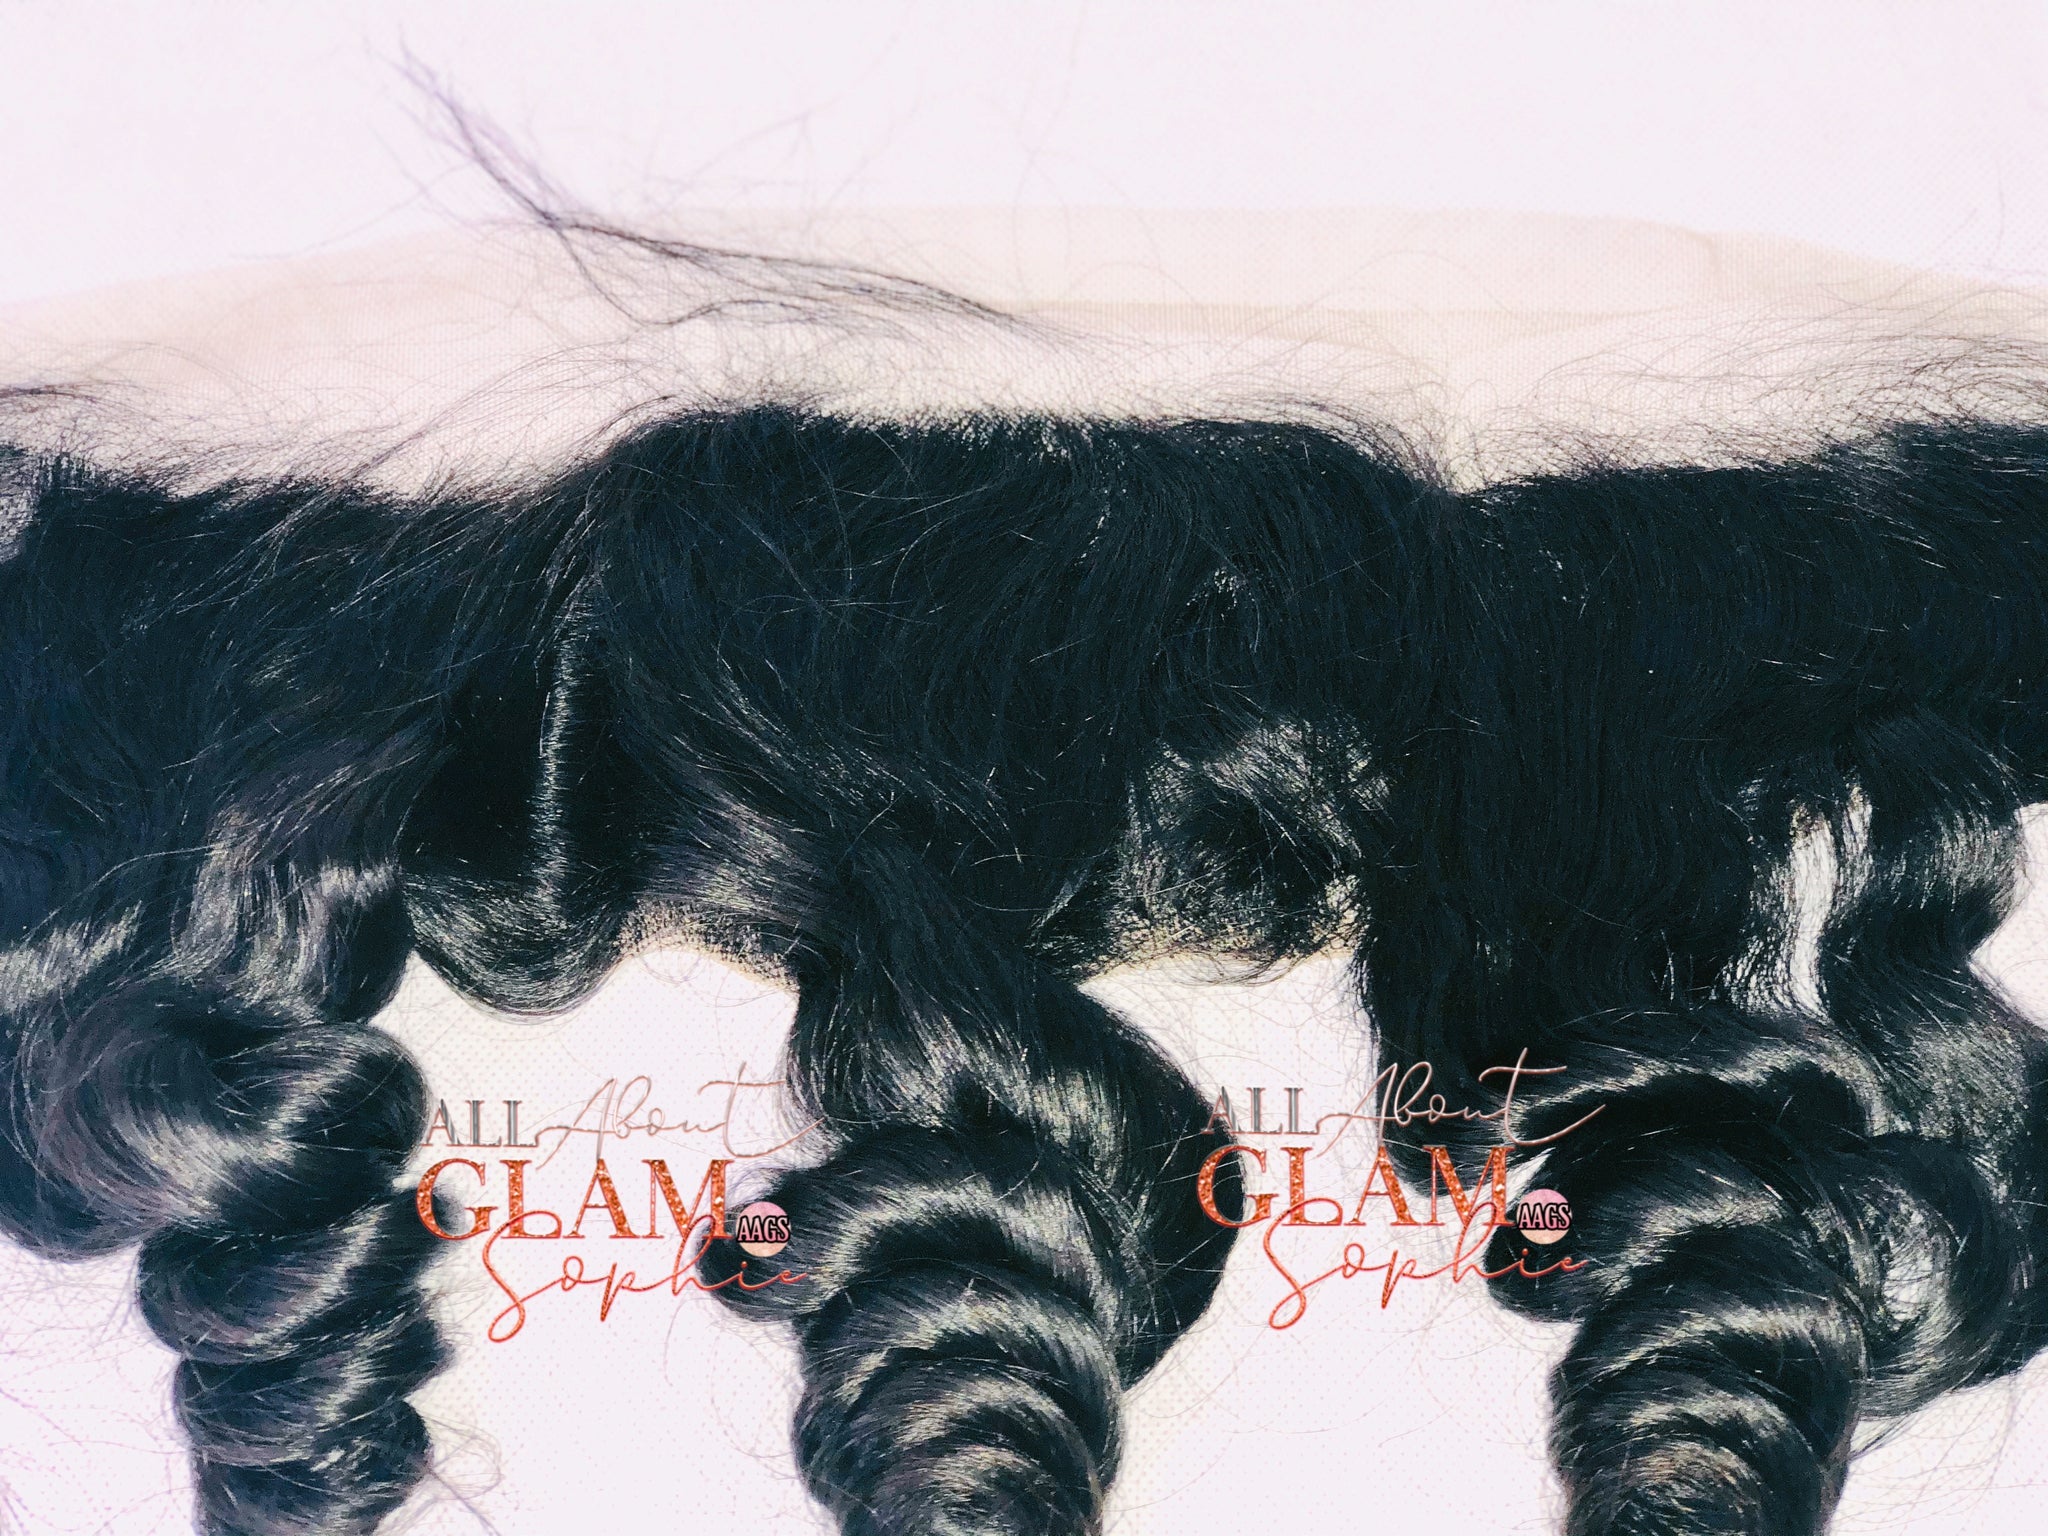 Lace Melting Band – Sistah's Indian Hair Closet